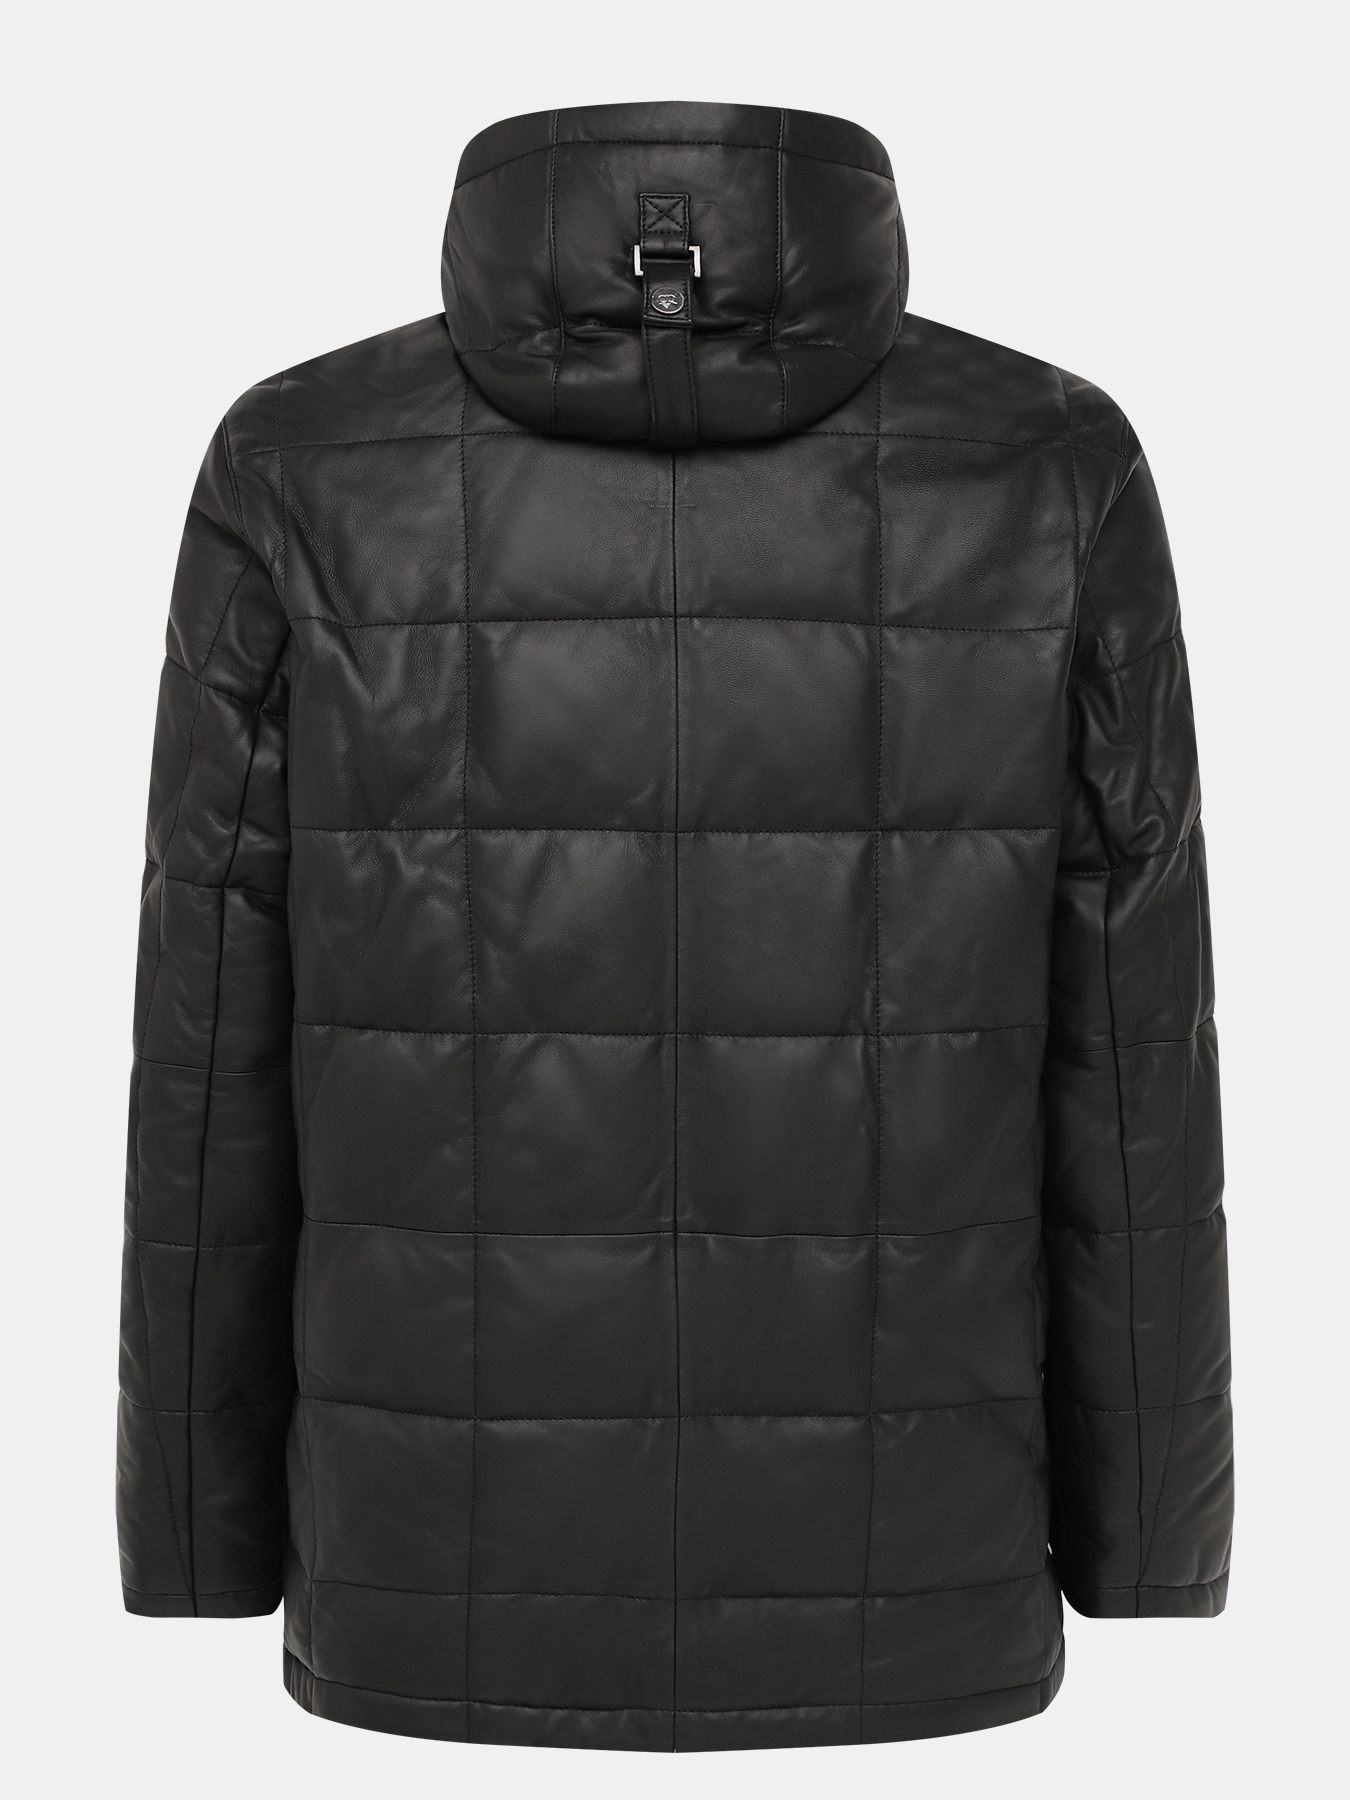 Кожаная куртка Ritter 390994-025, цвет черный, размер 48 - фото 5